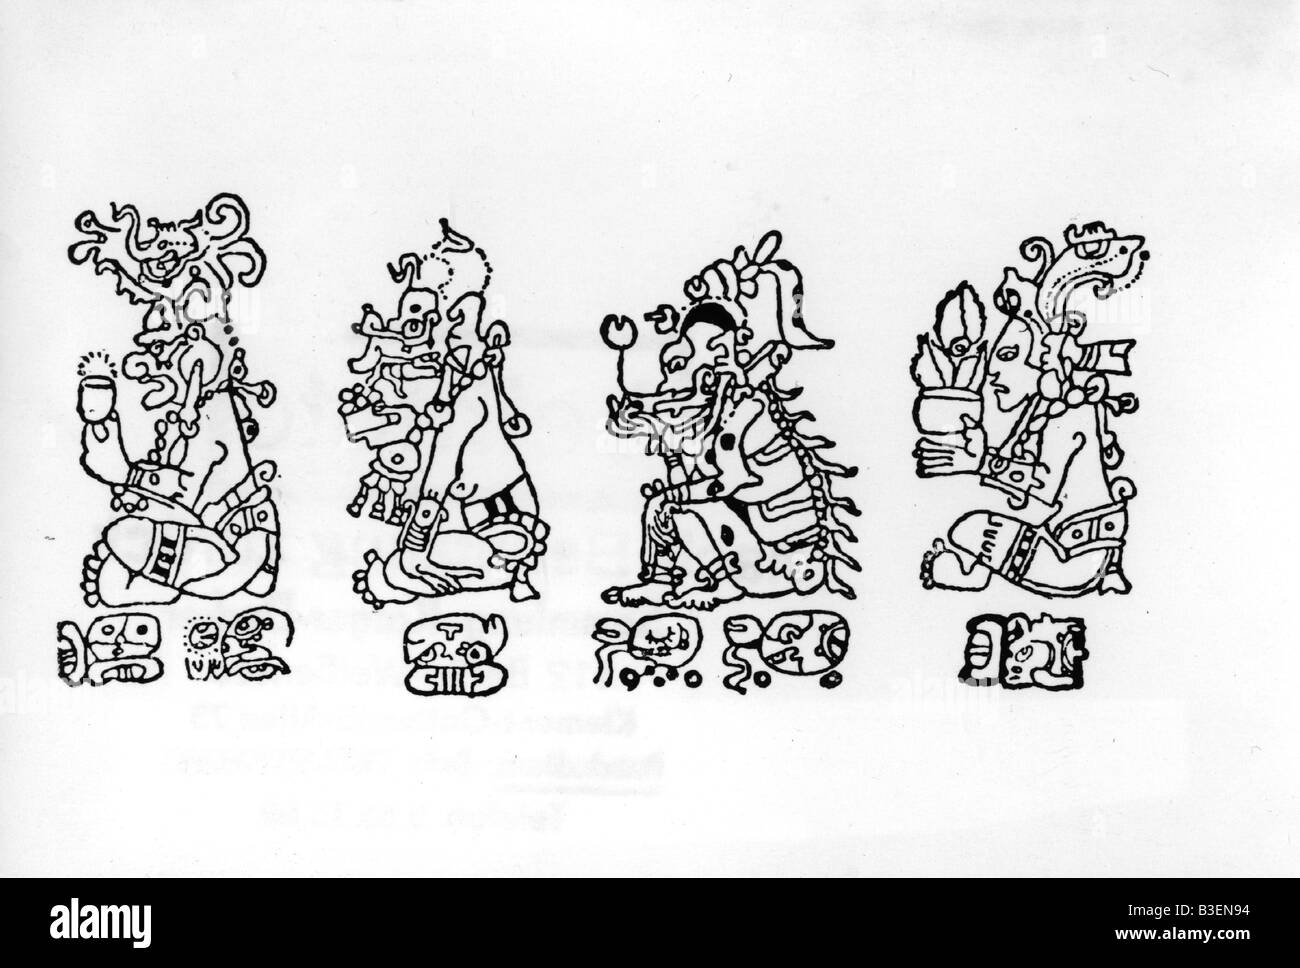 geography / travel, Mexico, Maya, religion, four main gods of the Maya: Itzamna, Kukulcan, Ahpuch and Jaue Kax, Central America, Mayas, Guatemala, god, belief, CEAM, historic, historical, Stock Photo